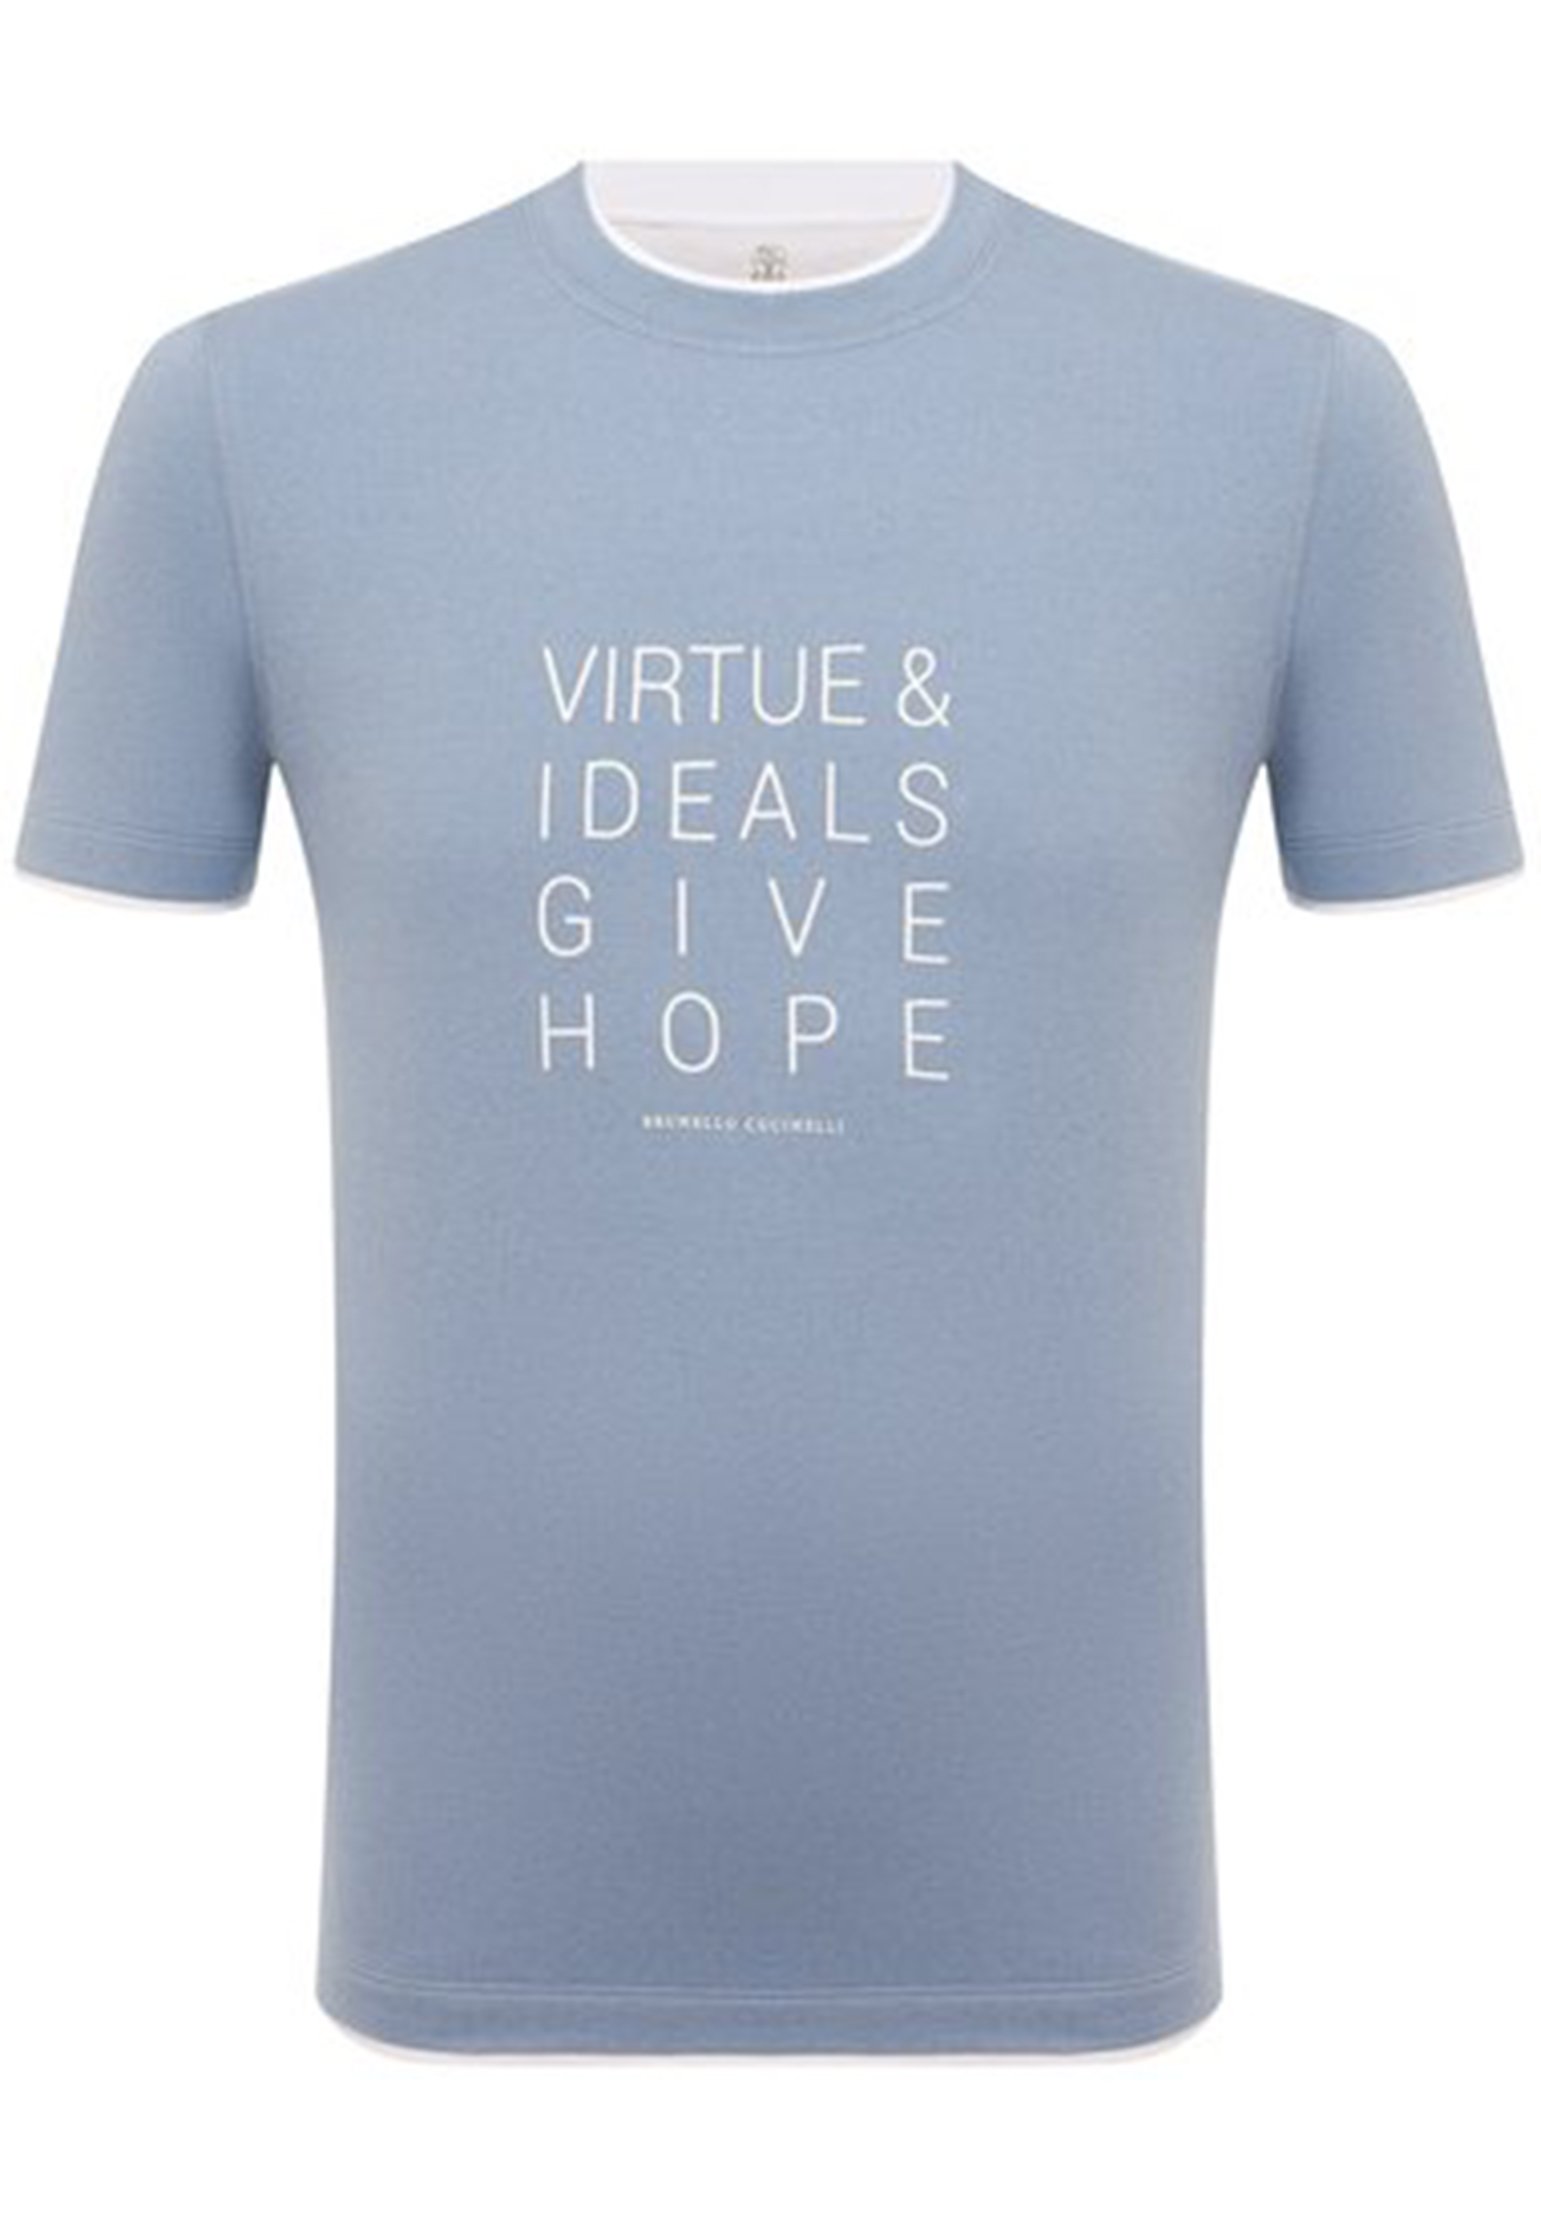 T-Shirt BRUNELLO CUCINELLI Color: blue (Code: 531) in online store Allure